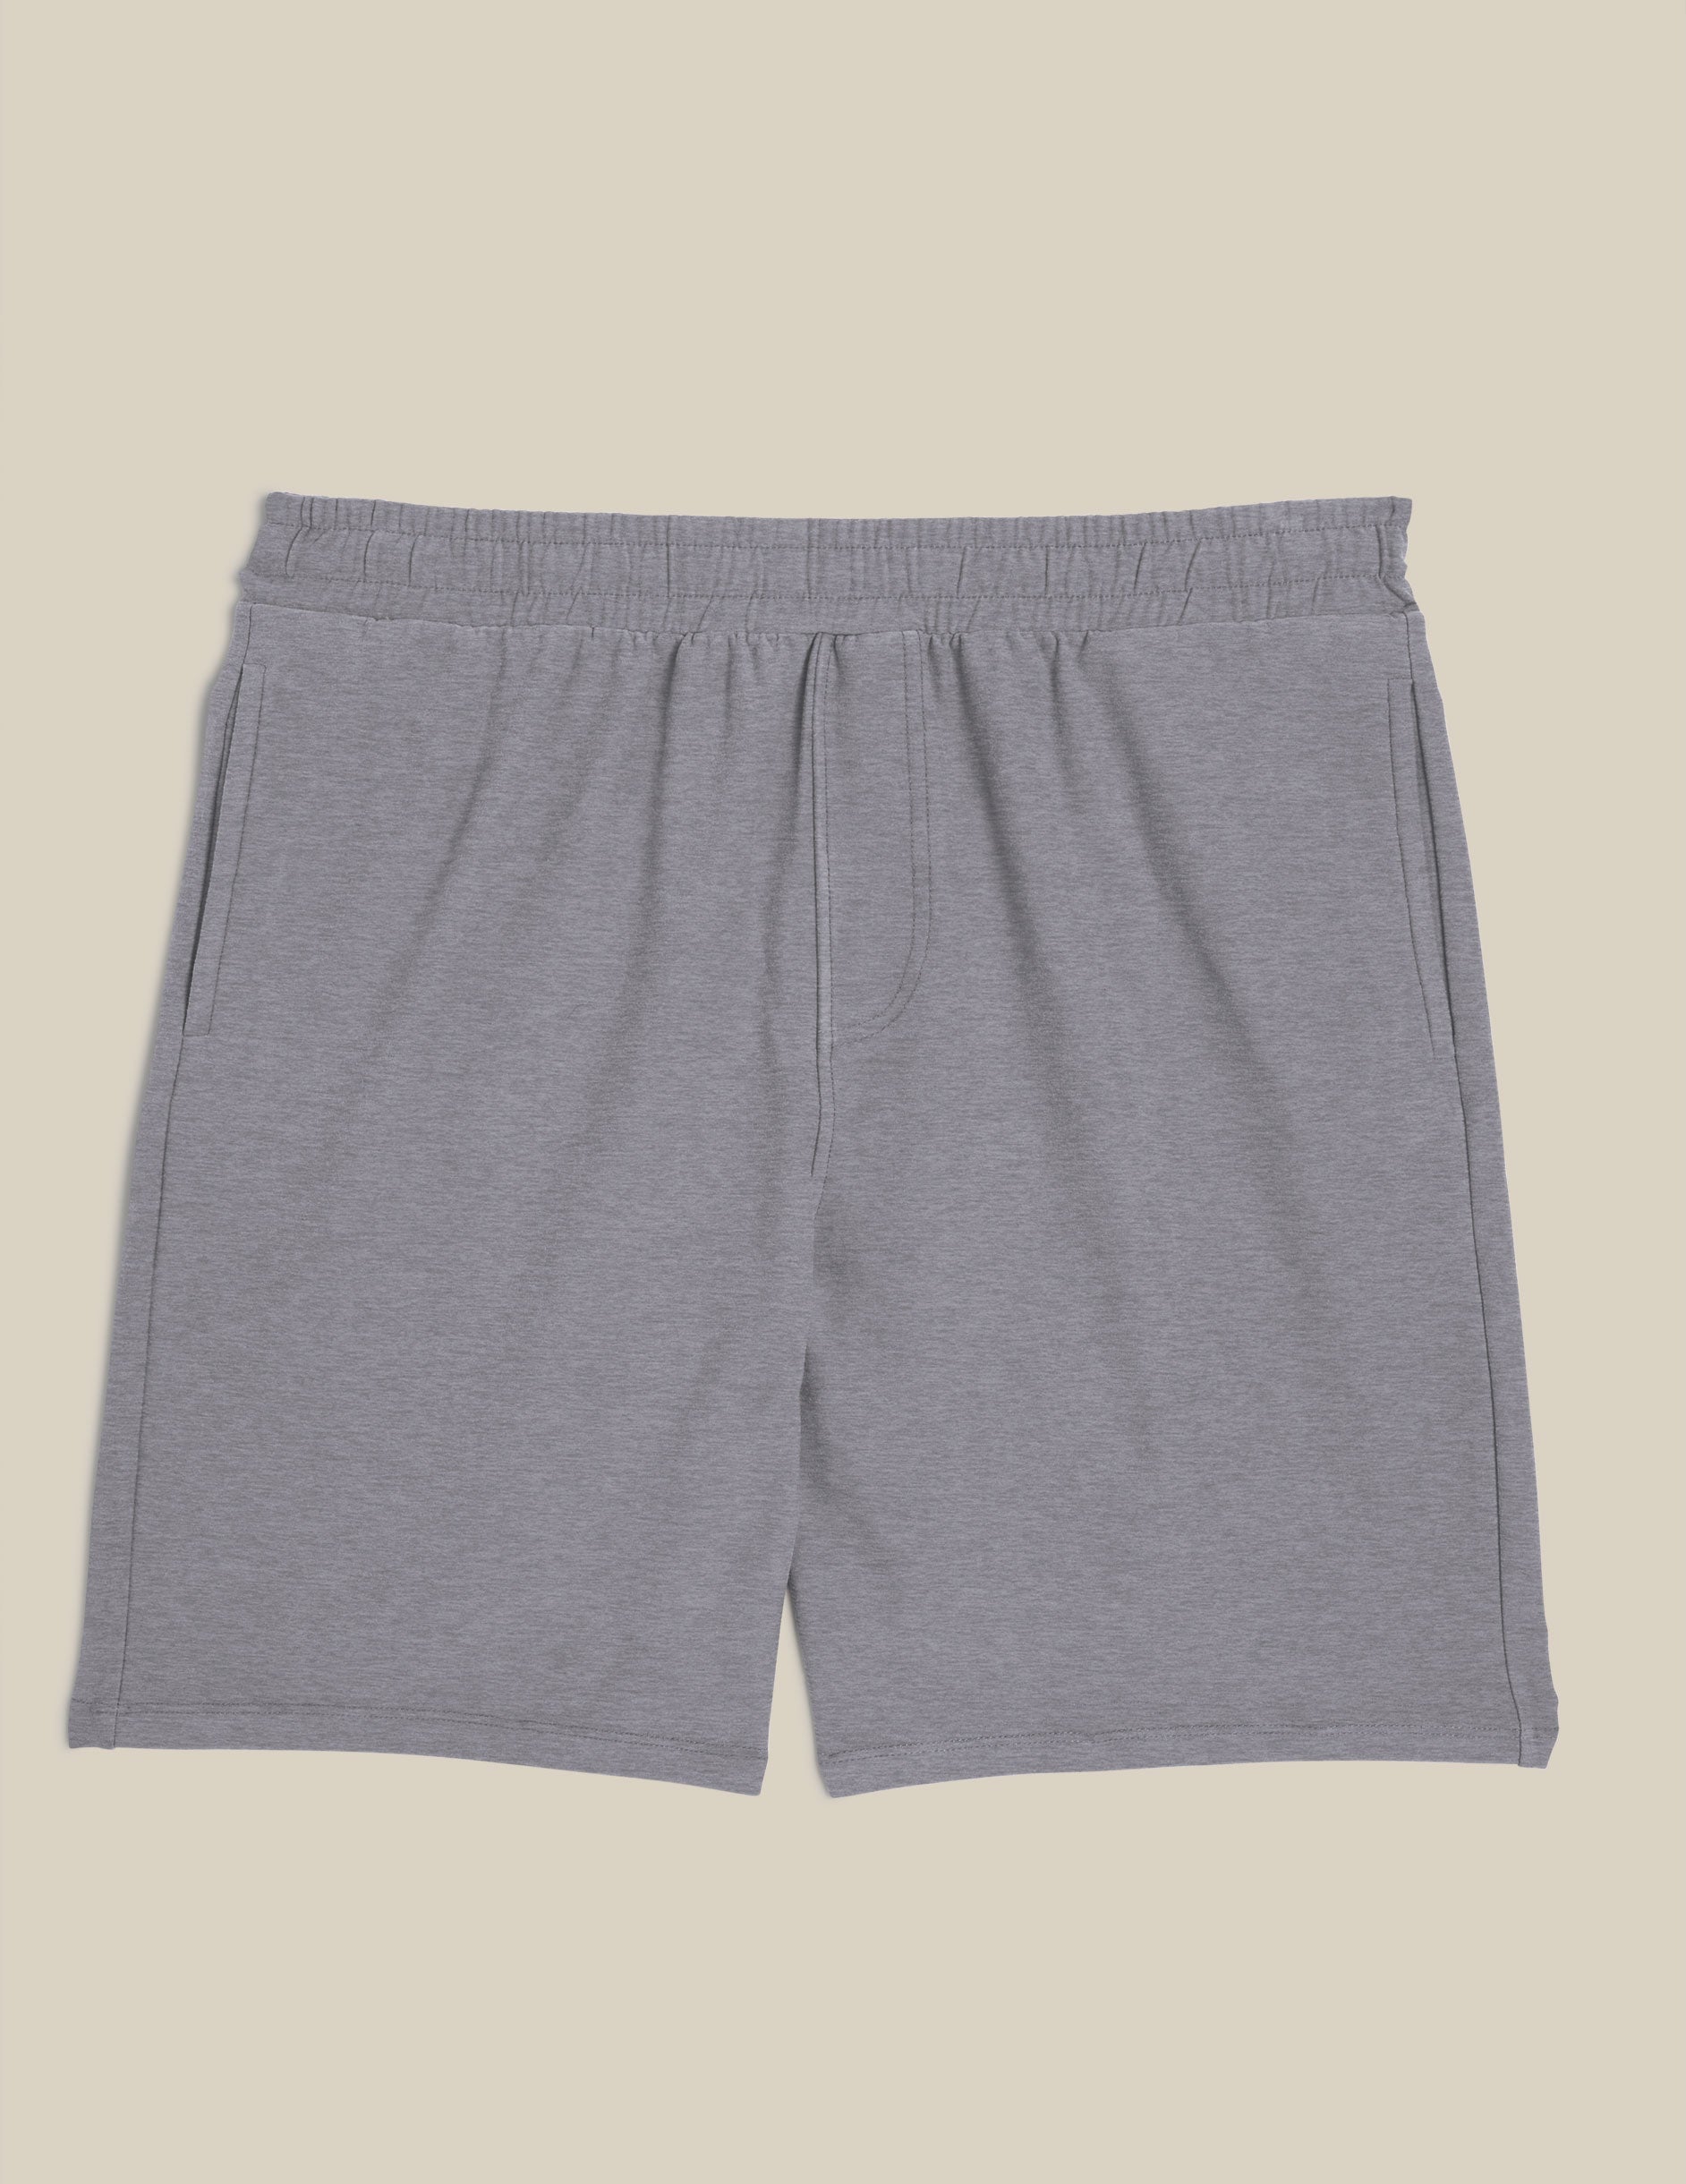 gray mens short with pockets.